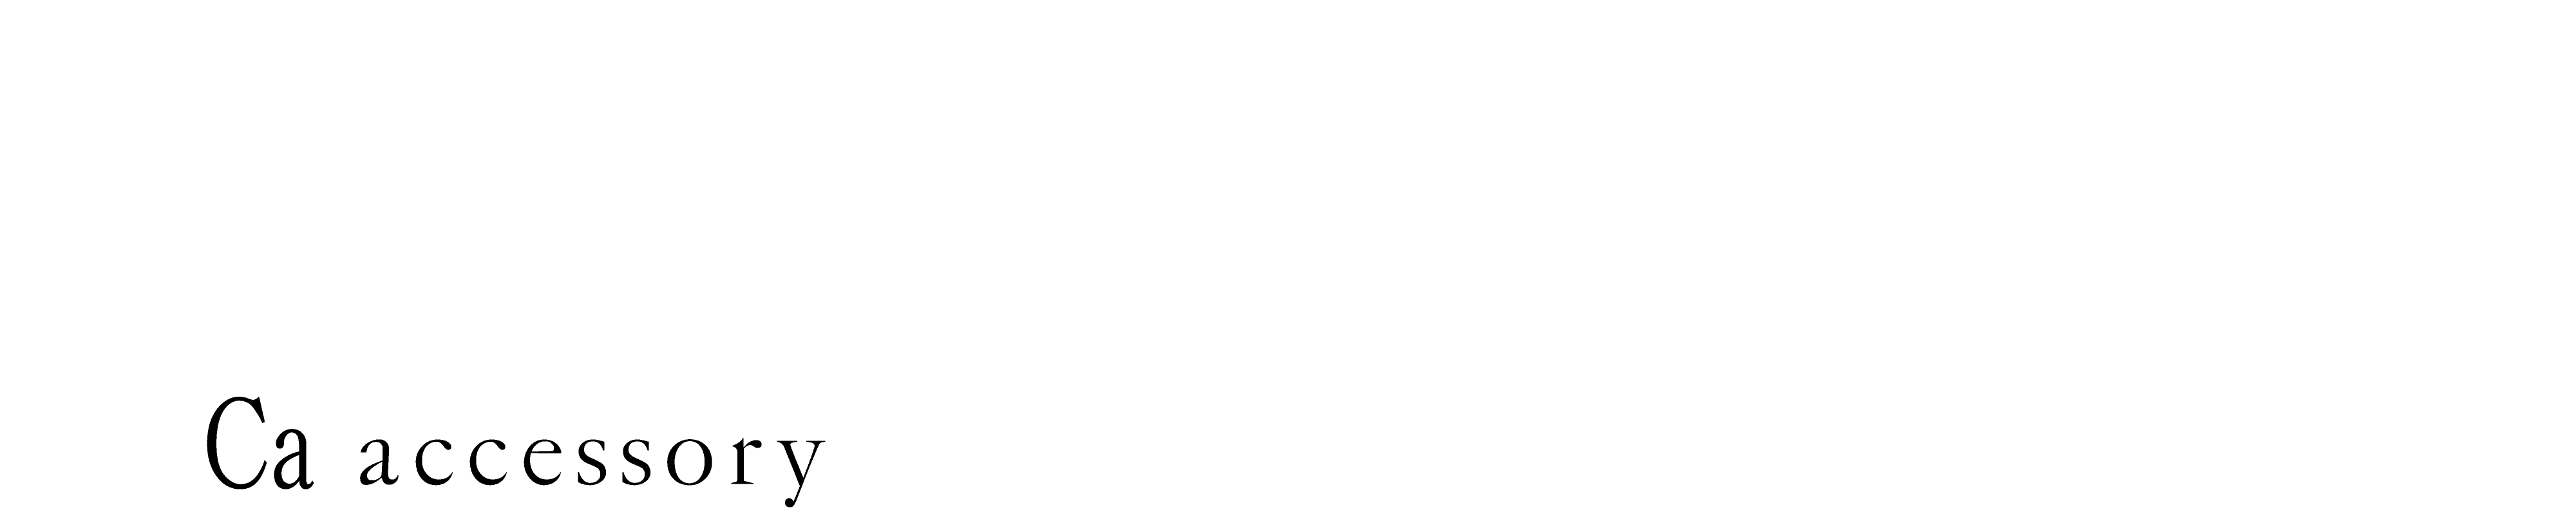 Deino × licoyasコラボ『シーエアクセサリー』